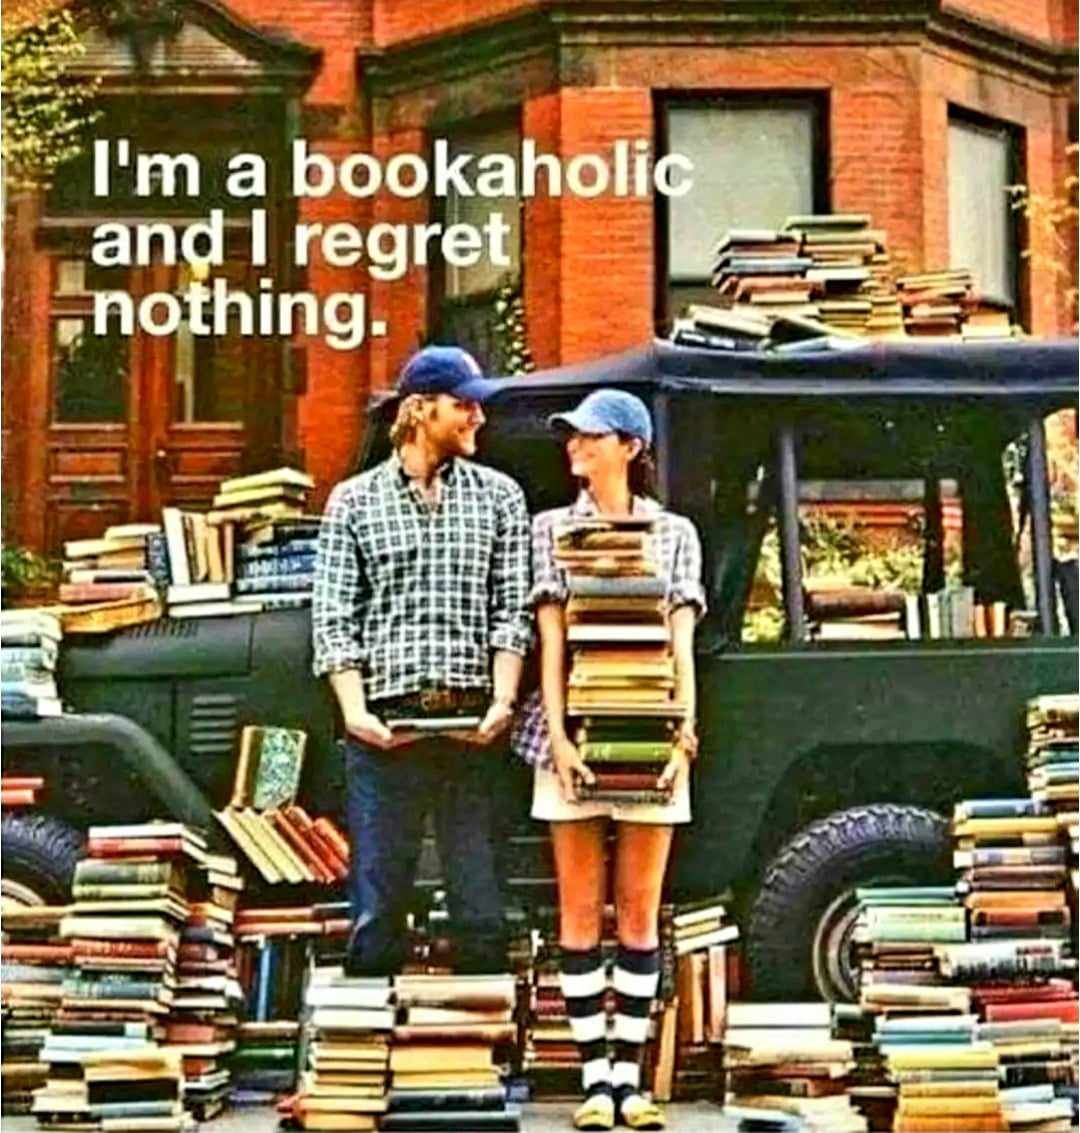 I am too! Who else in here is a bookaholic?
#etmulloney #bookaholic #BookTwitter #bookauthor #bookaddict #anointedpathways #theteenagewealthypreneur #theteenagehealthypreneur #theteenagesocialmediadetox #inkoftears #AmazonBooks #amazonbest